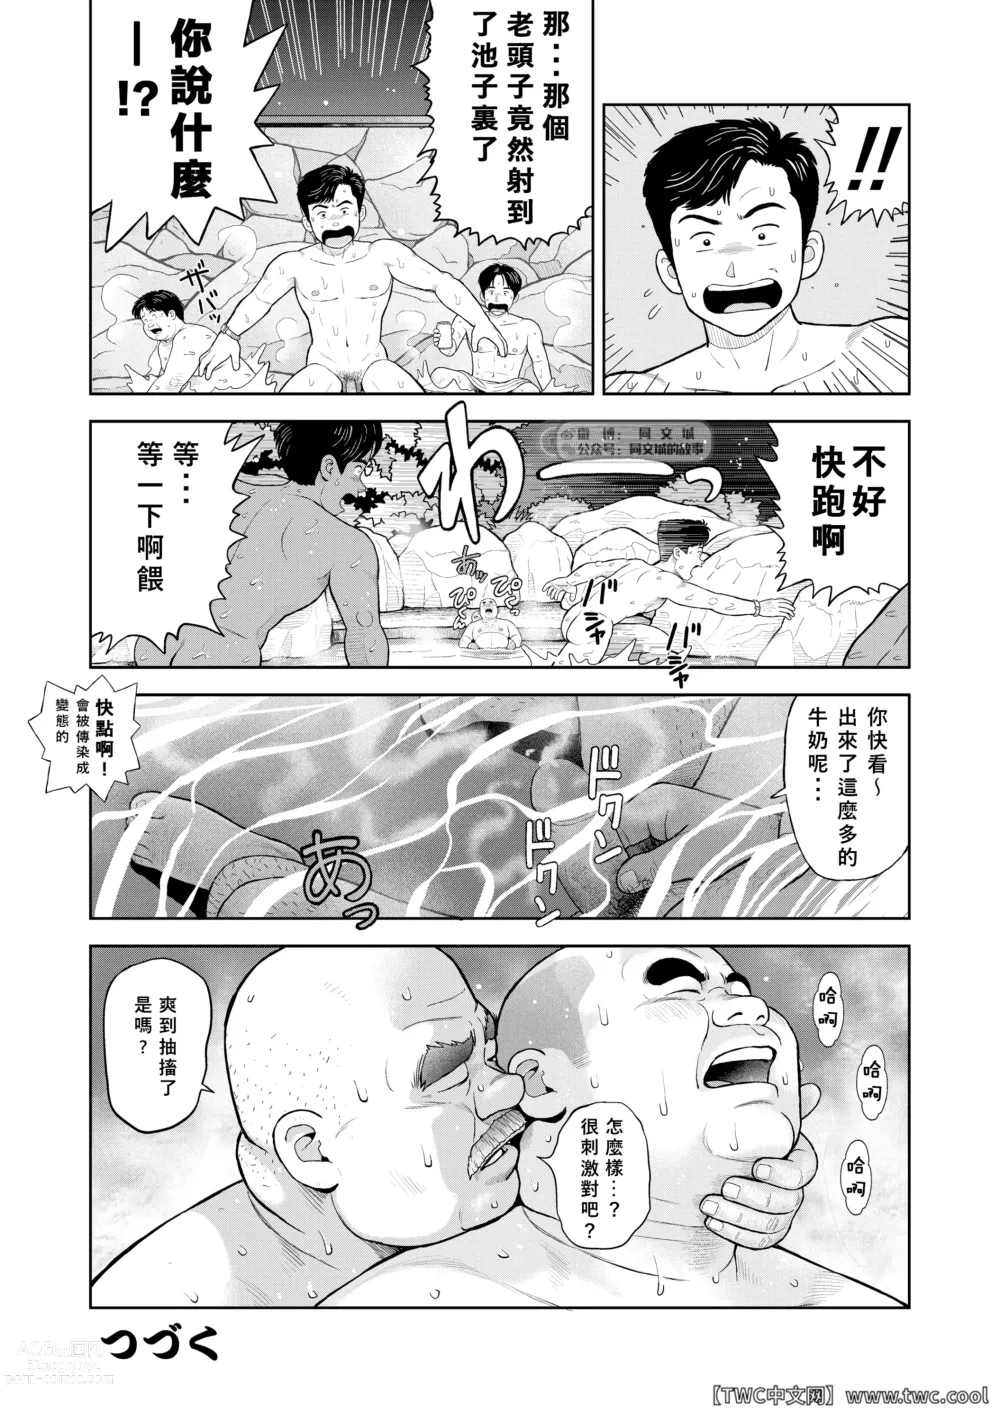 Page 26 of doujinshi Kunoyu Nijyuhatihatsume Sakarujixi